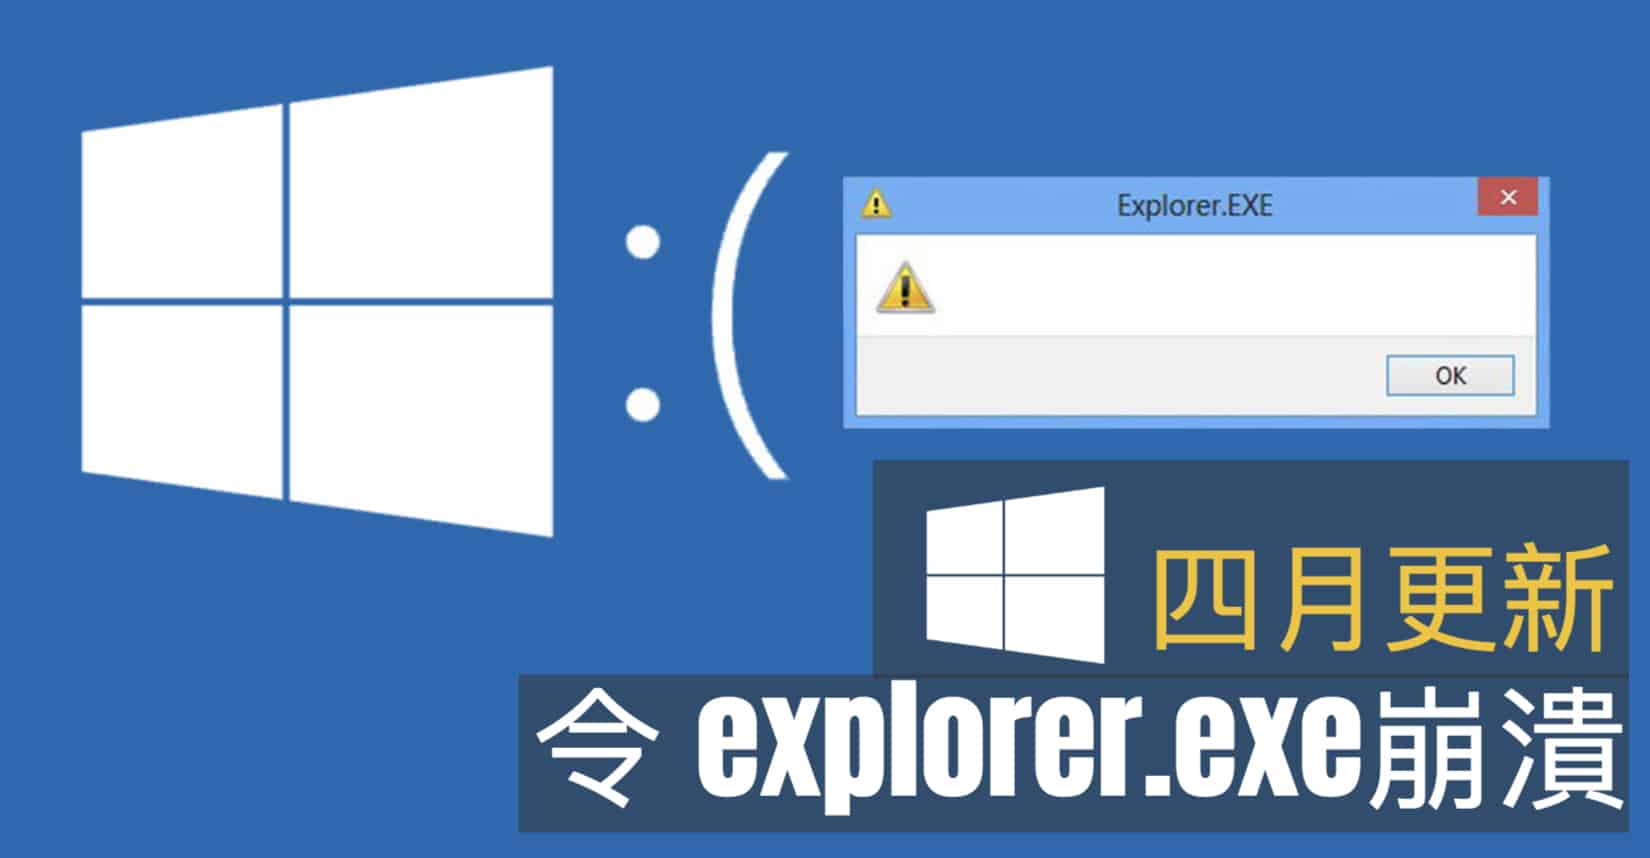 windows 10 april update explorer exe crash 00a